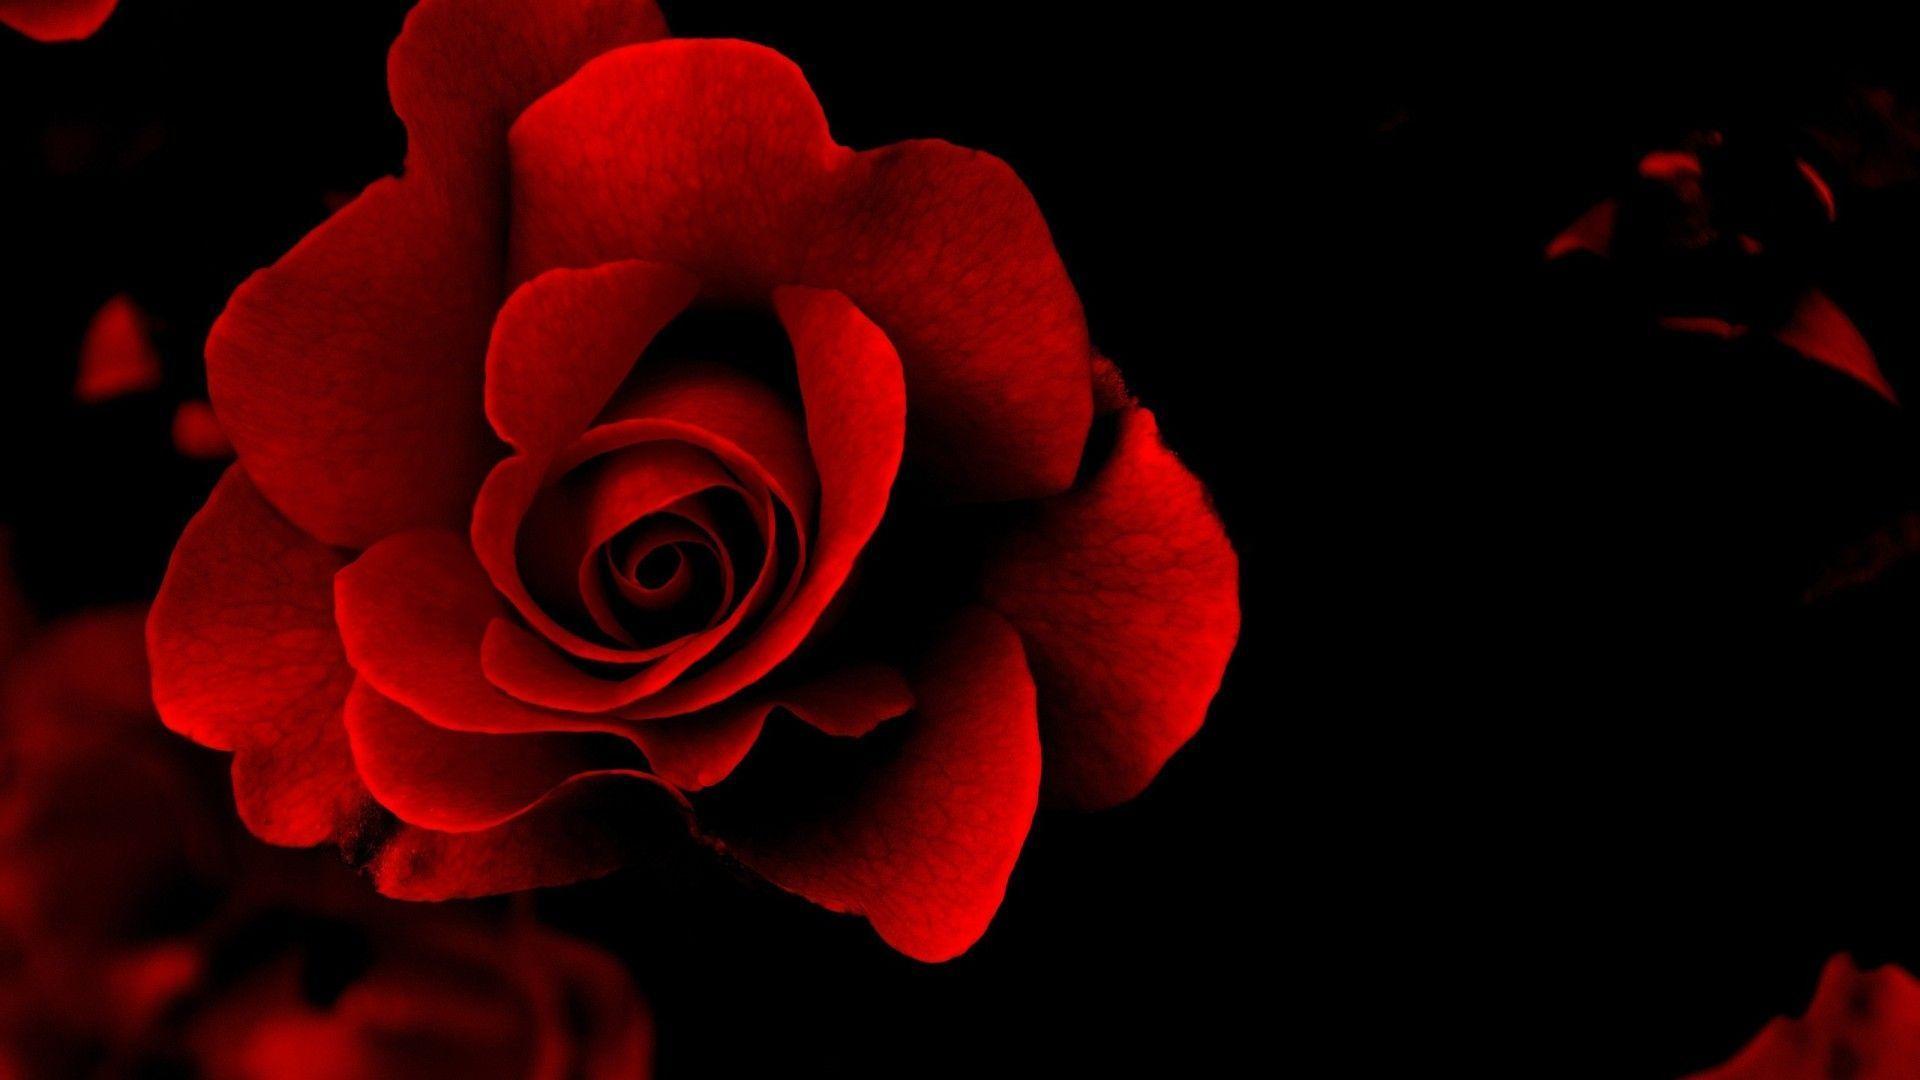 Red Rose Flower Black Backround, iPhone Wallpaper, Facebook Cover